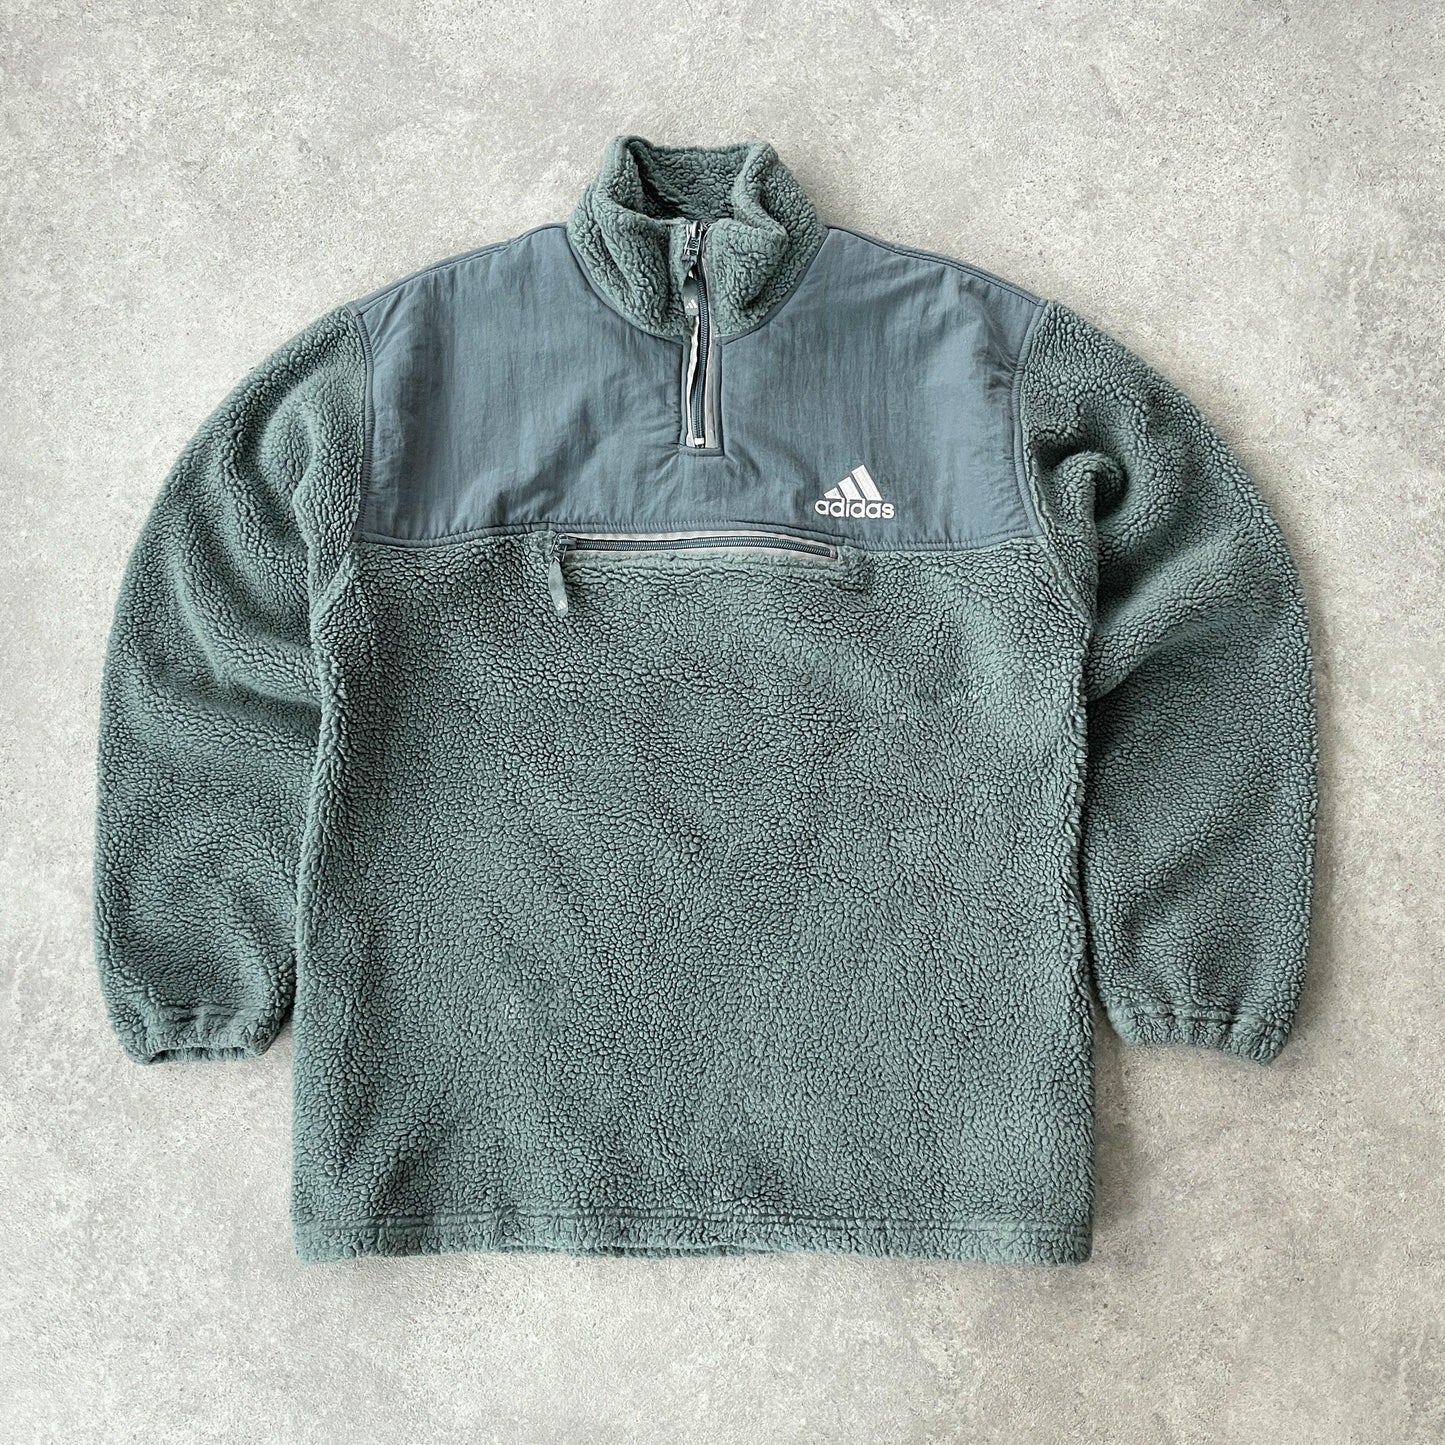 Adidas 1999 deep pile sherpa fleece jacket (L) - Known Source